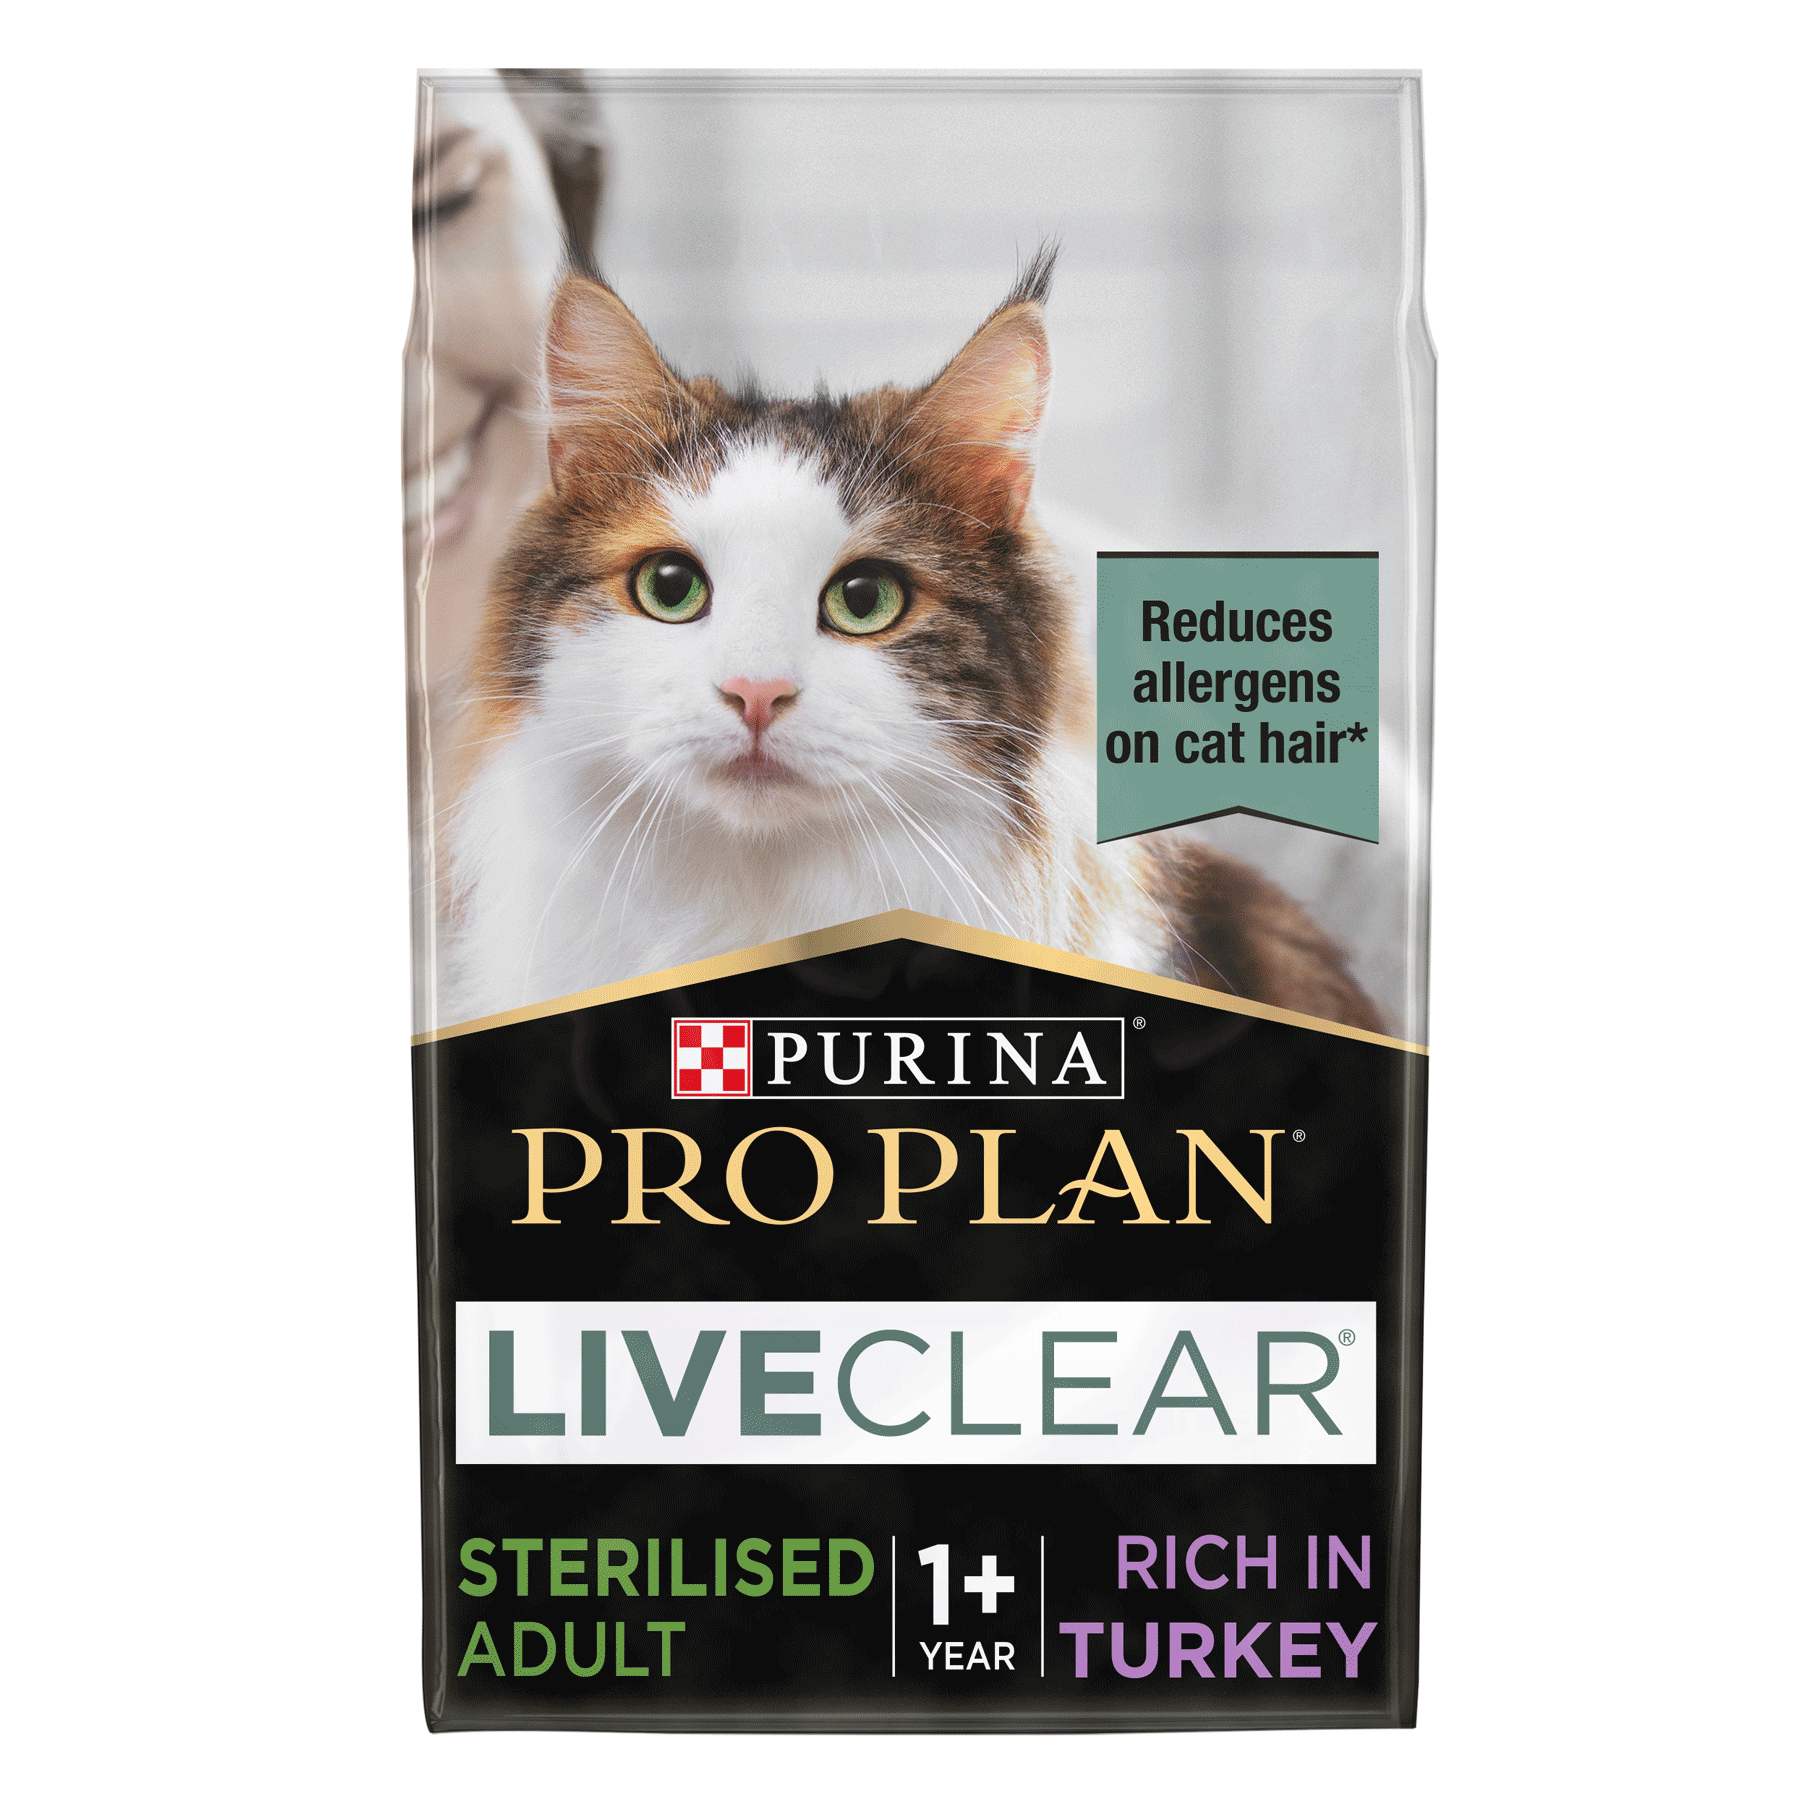 Проплан для кошек live clear. Purina Pro Plan liveclear "Sterilised". Проплан Live Clear. Pro Plan Live Clear. Pro Plan sensitive для кошек.